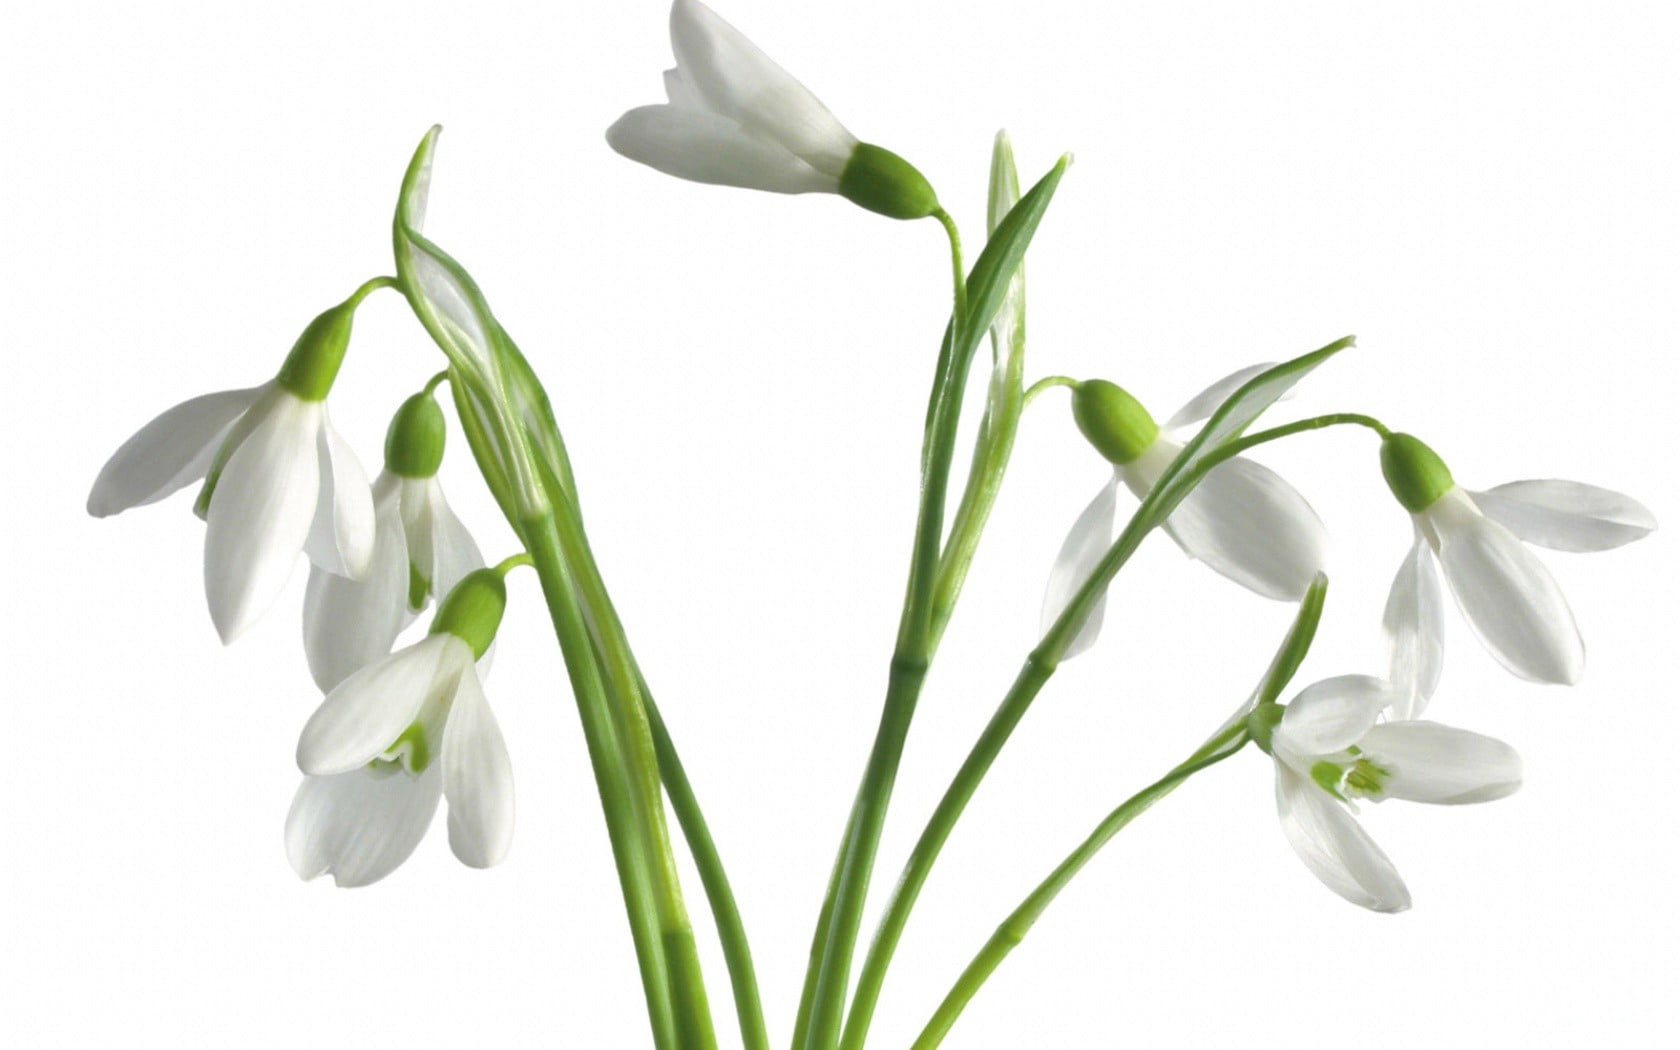 3840x2160 resolution | white Snowdrop flowers in closeup photo\] HD ...